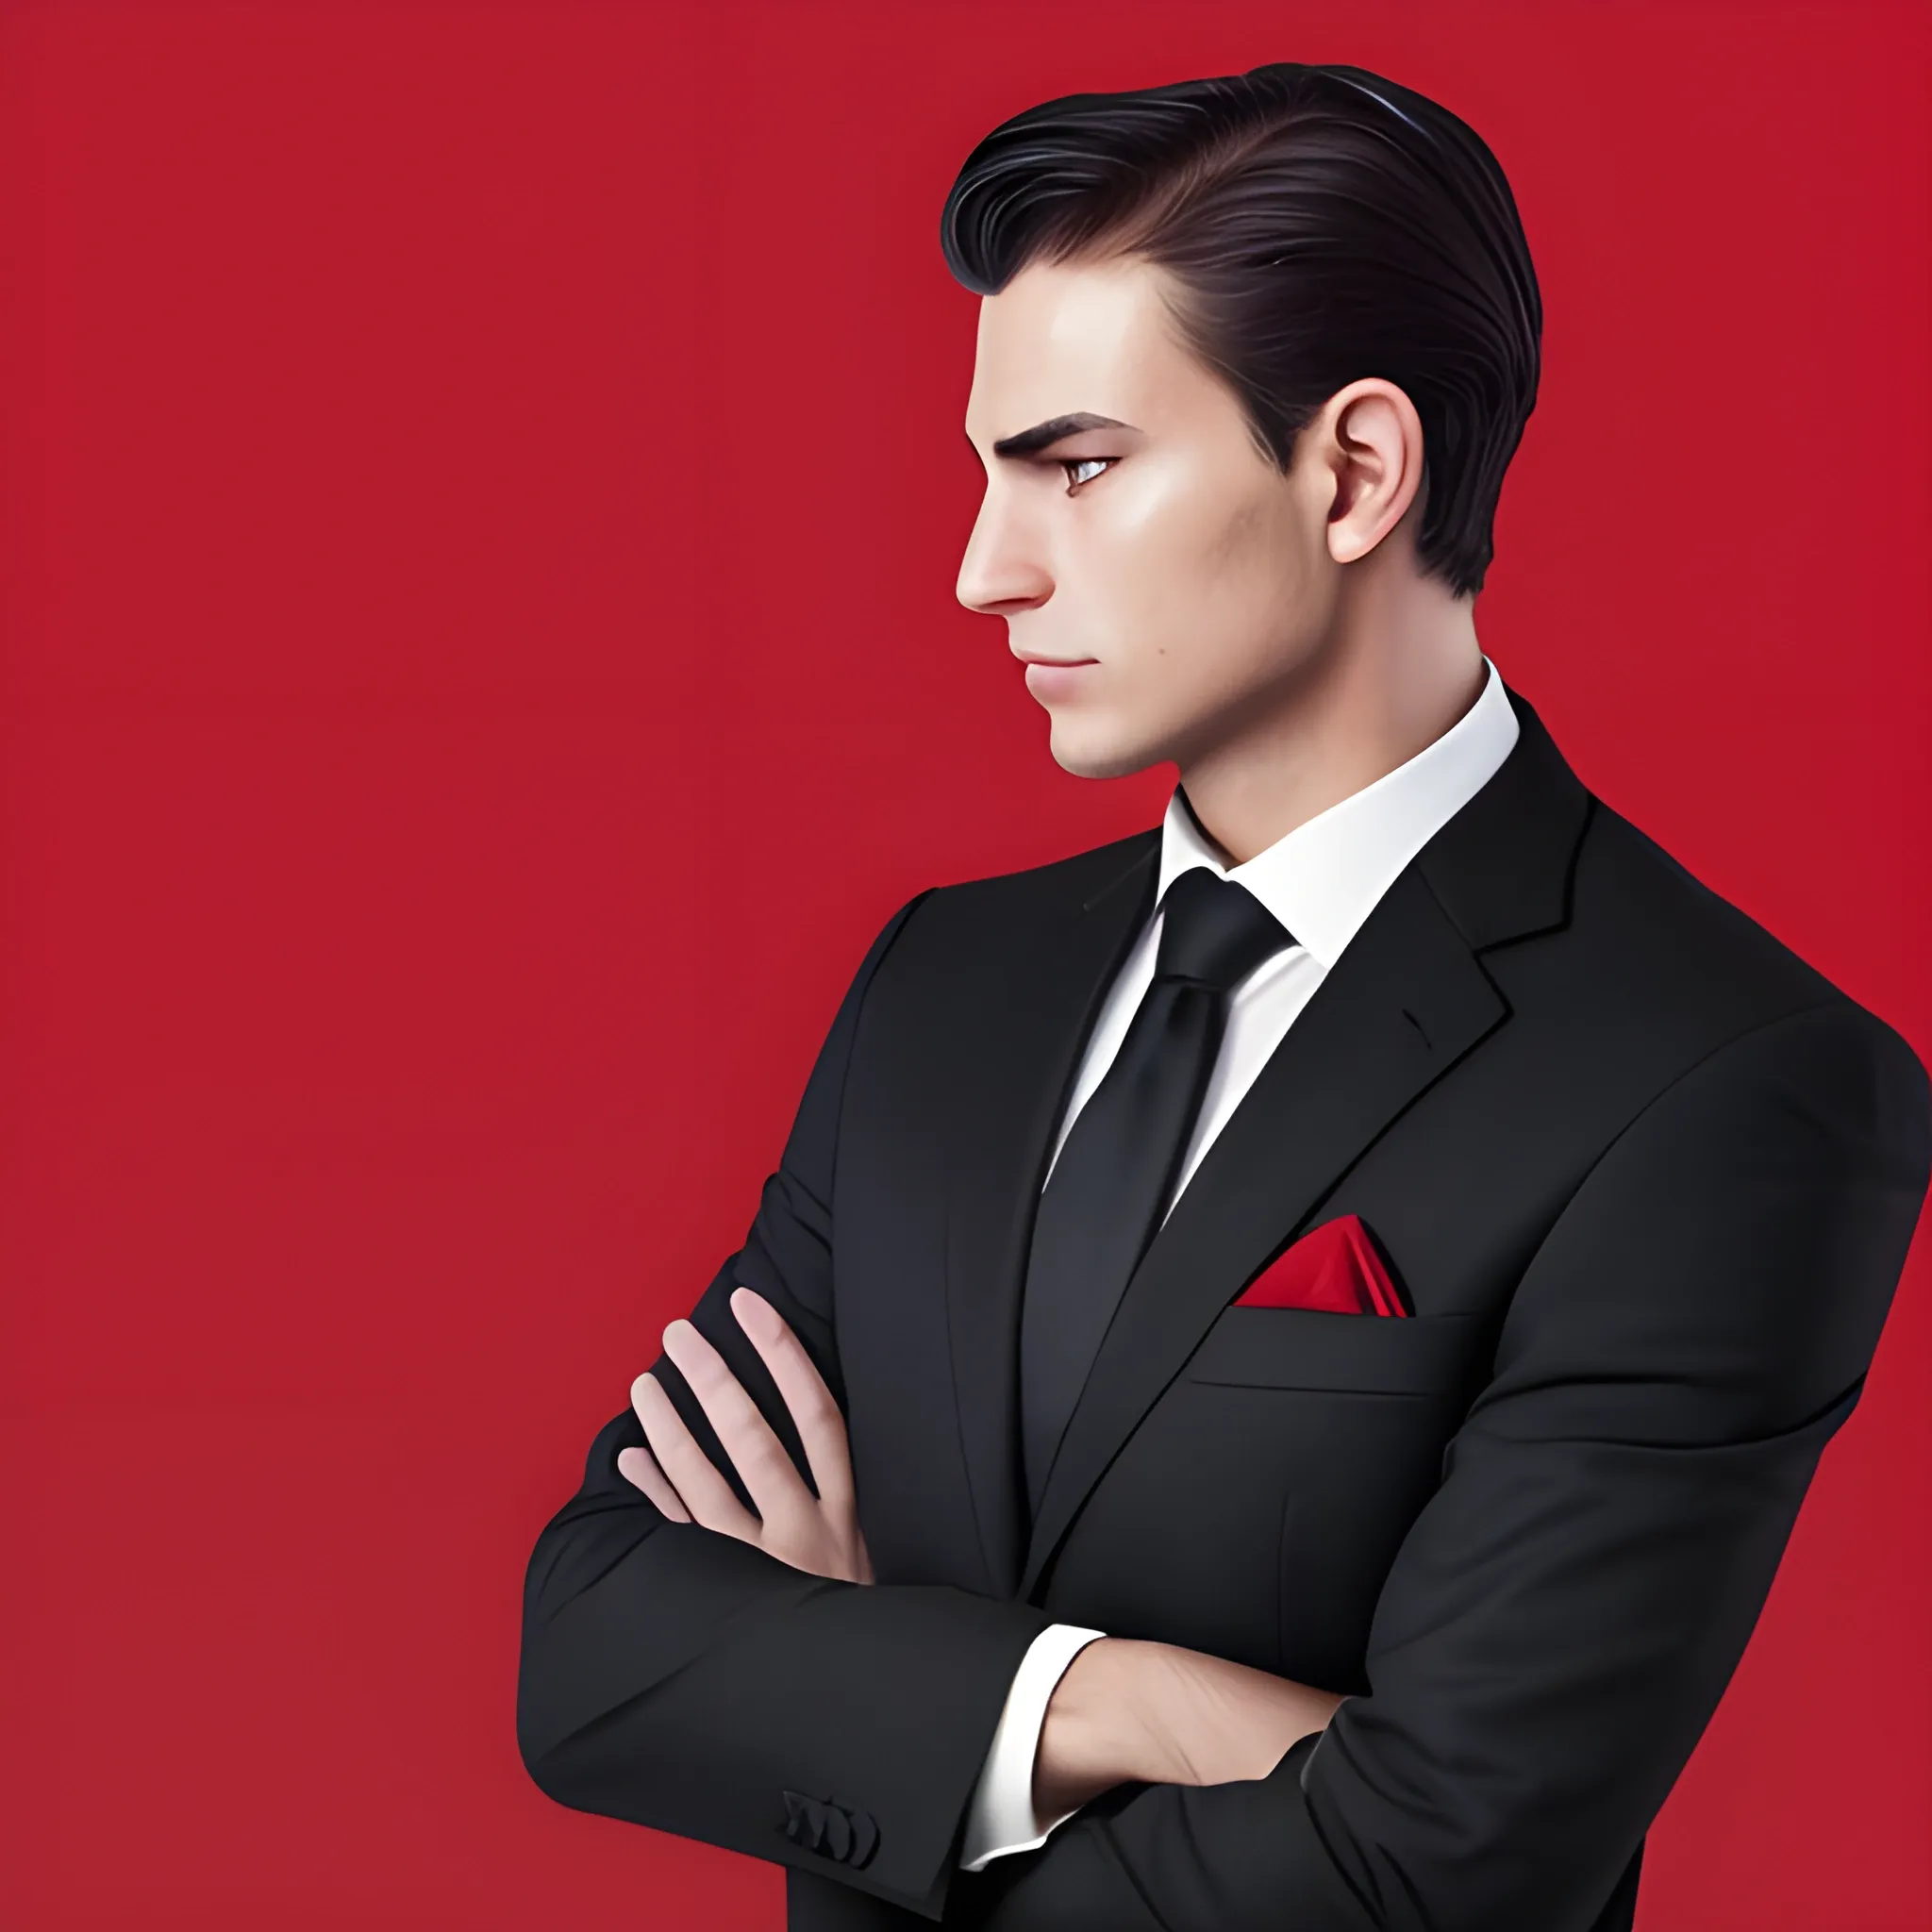 Black suit red tie Vectors & Illustrations for Free Download | Freepik